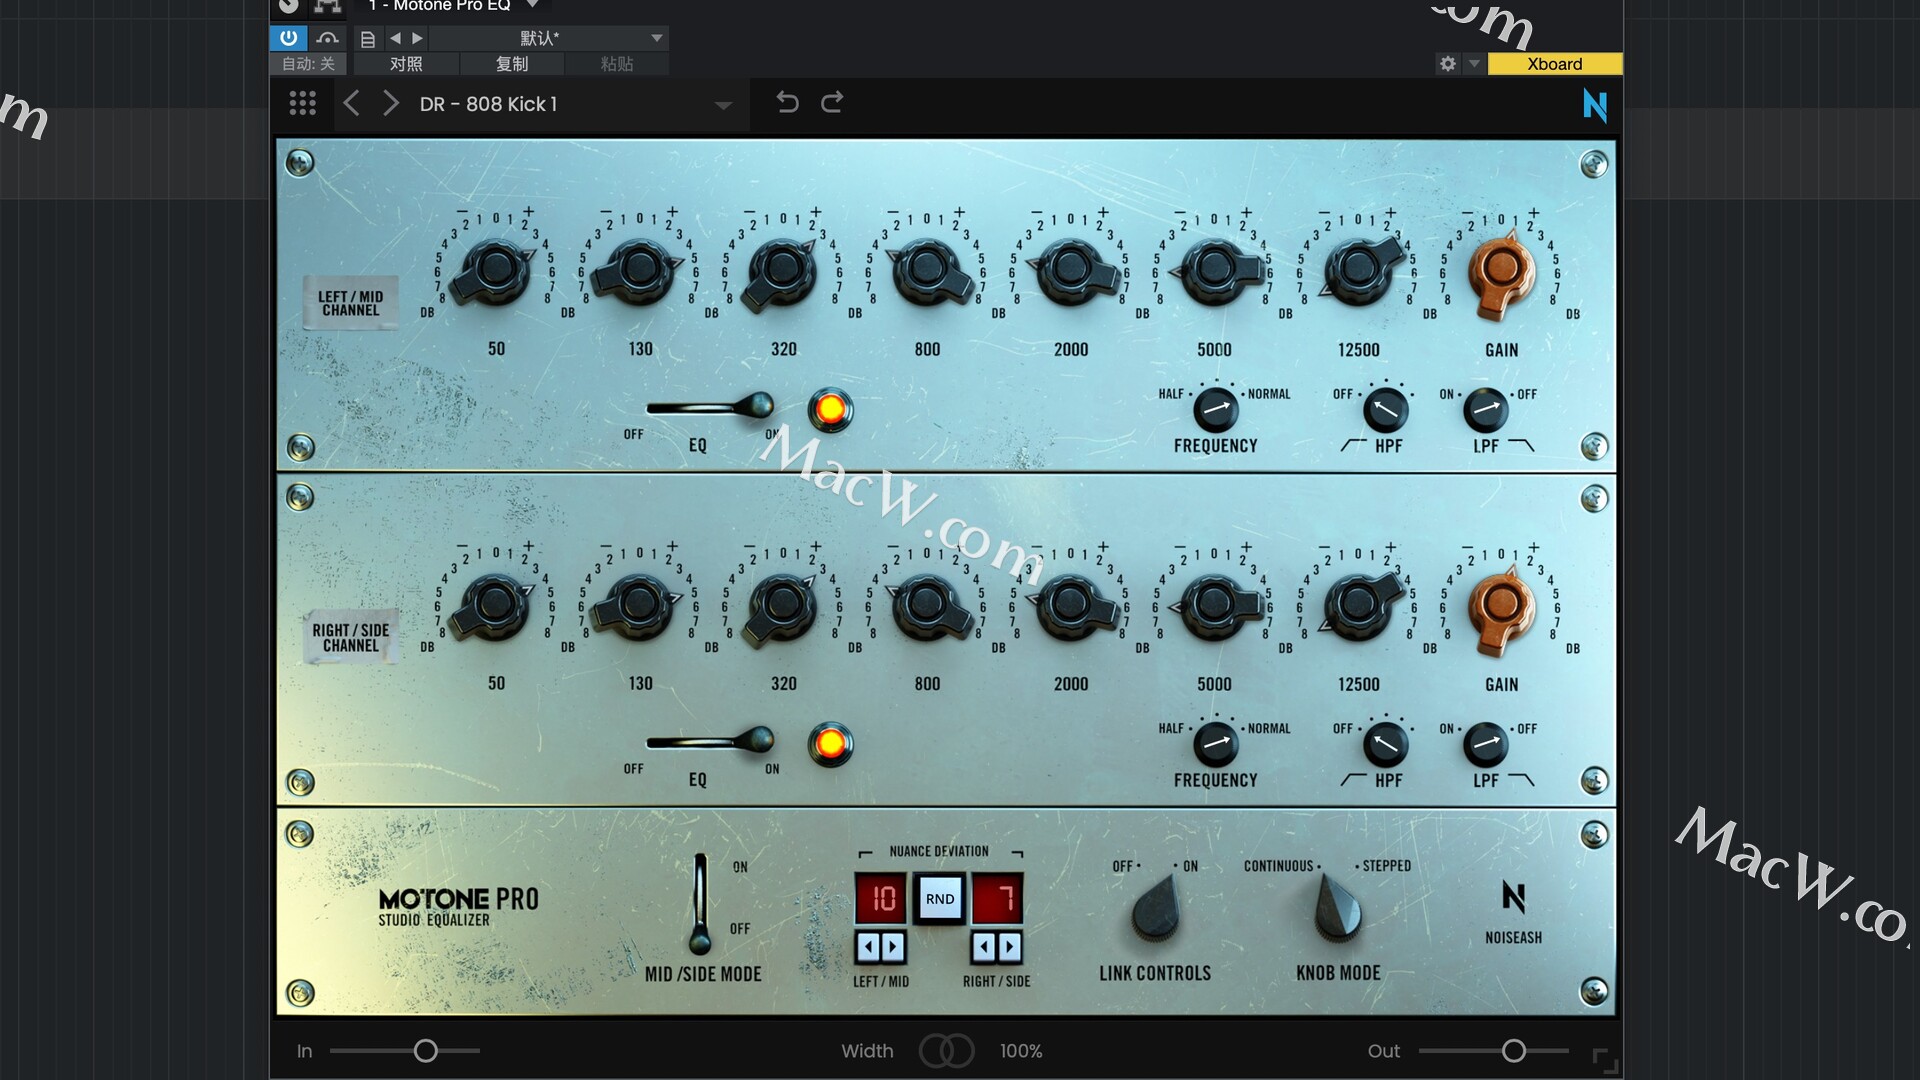 NoiseAsh Audio Motone Pro Bundle for Mac(图形均衡器合集)